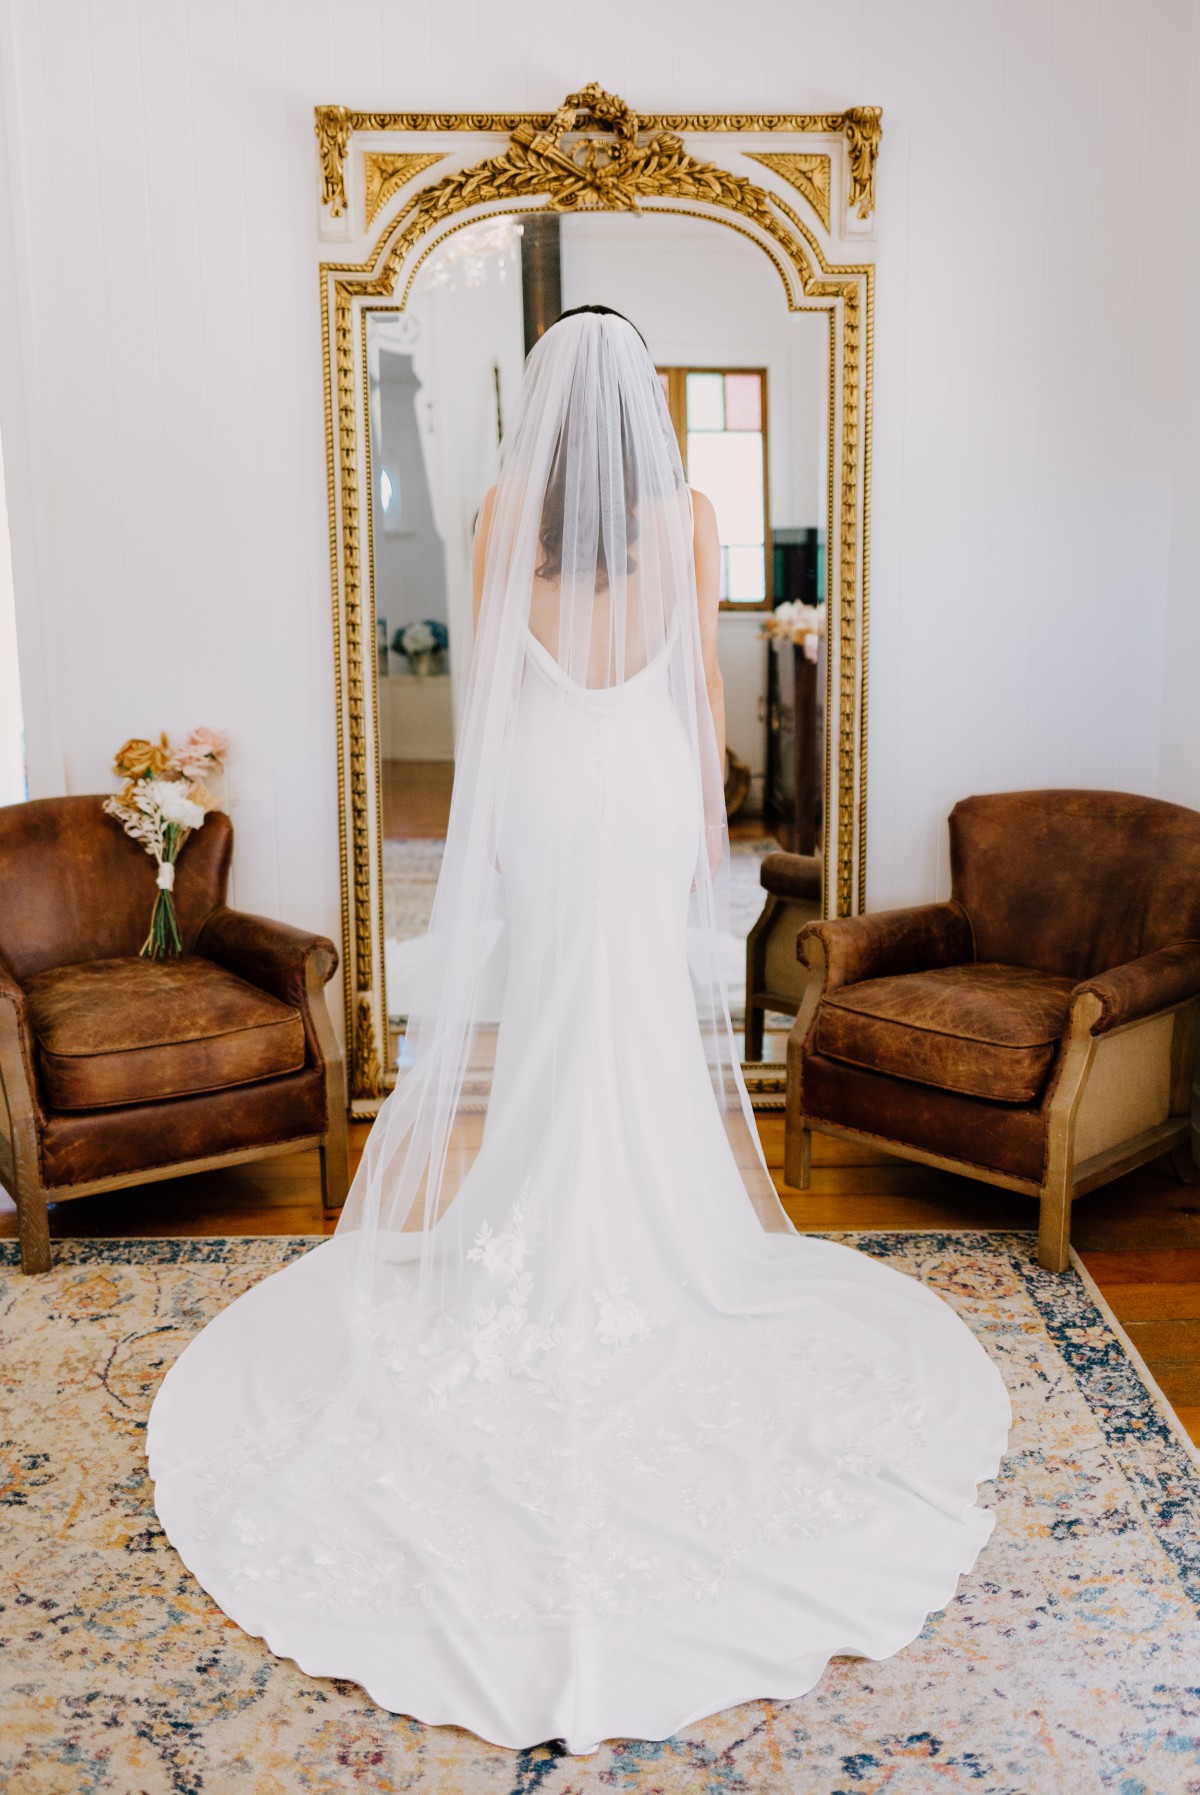 Bride in wedding dress looking in mirror